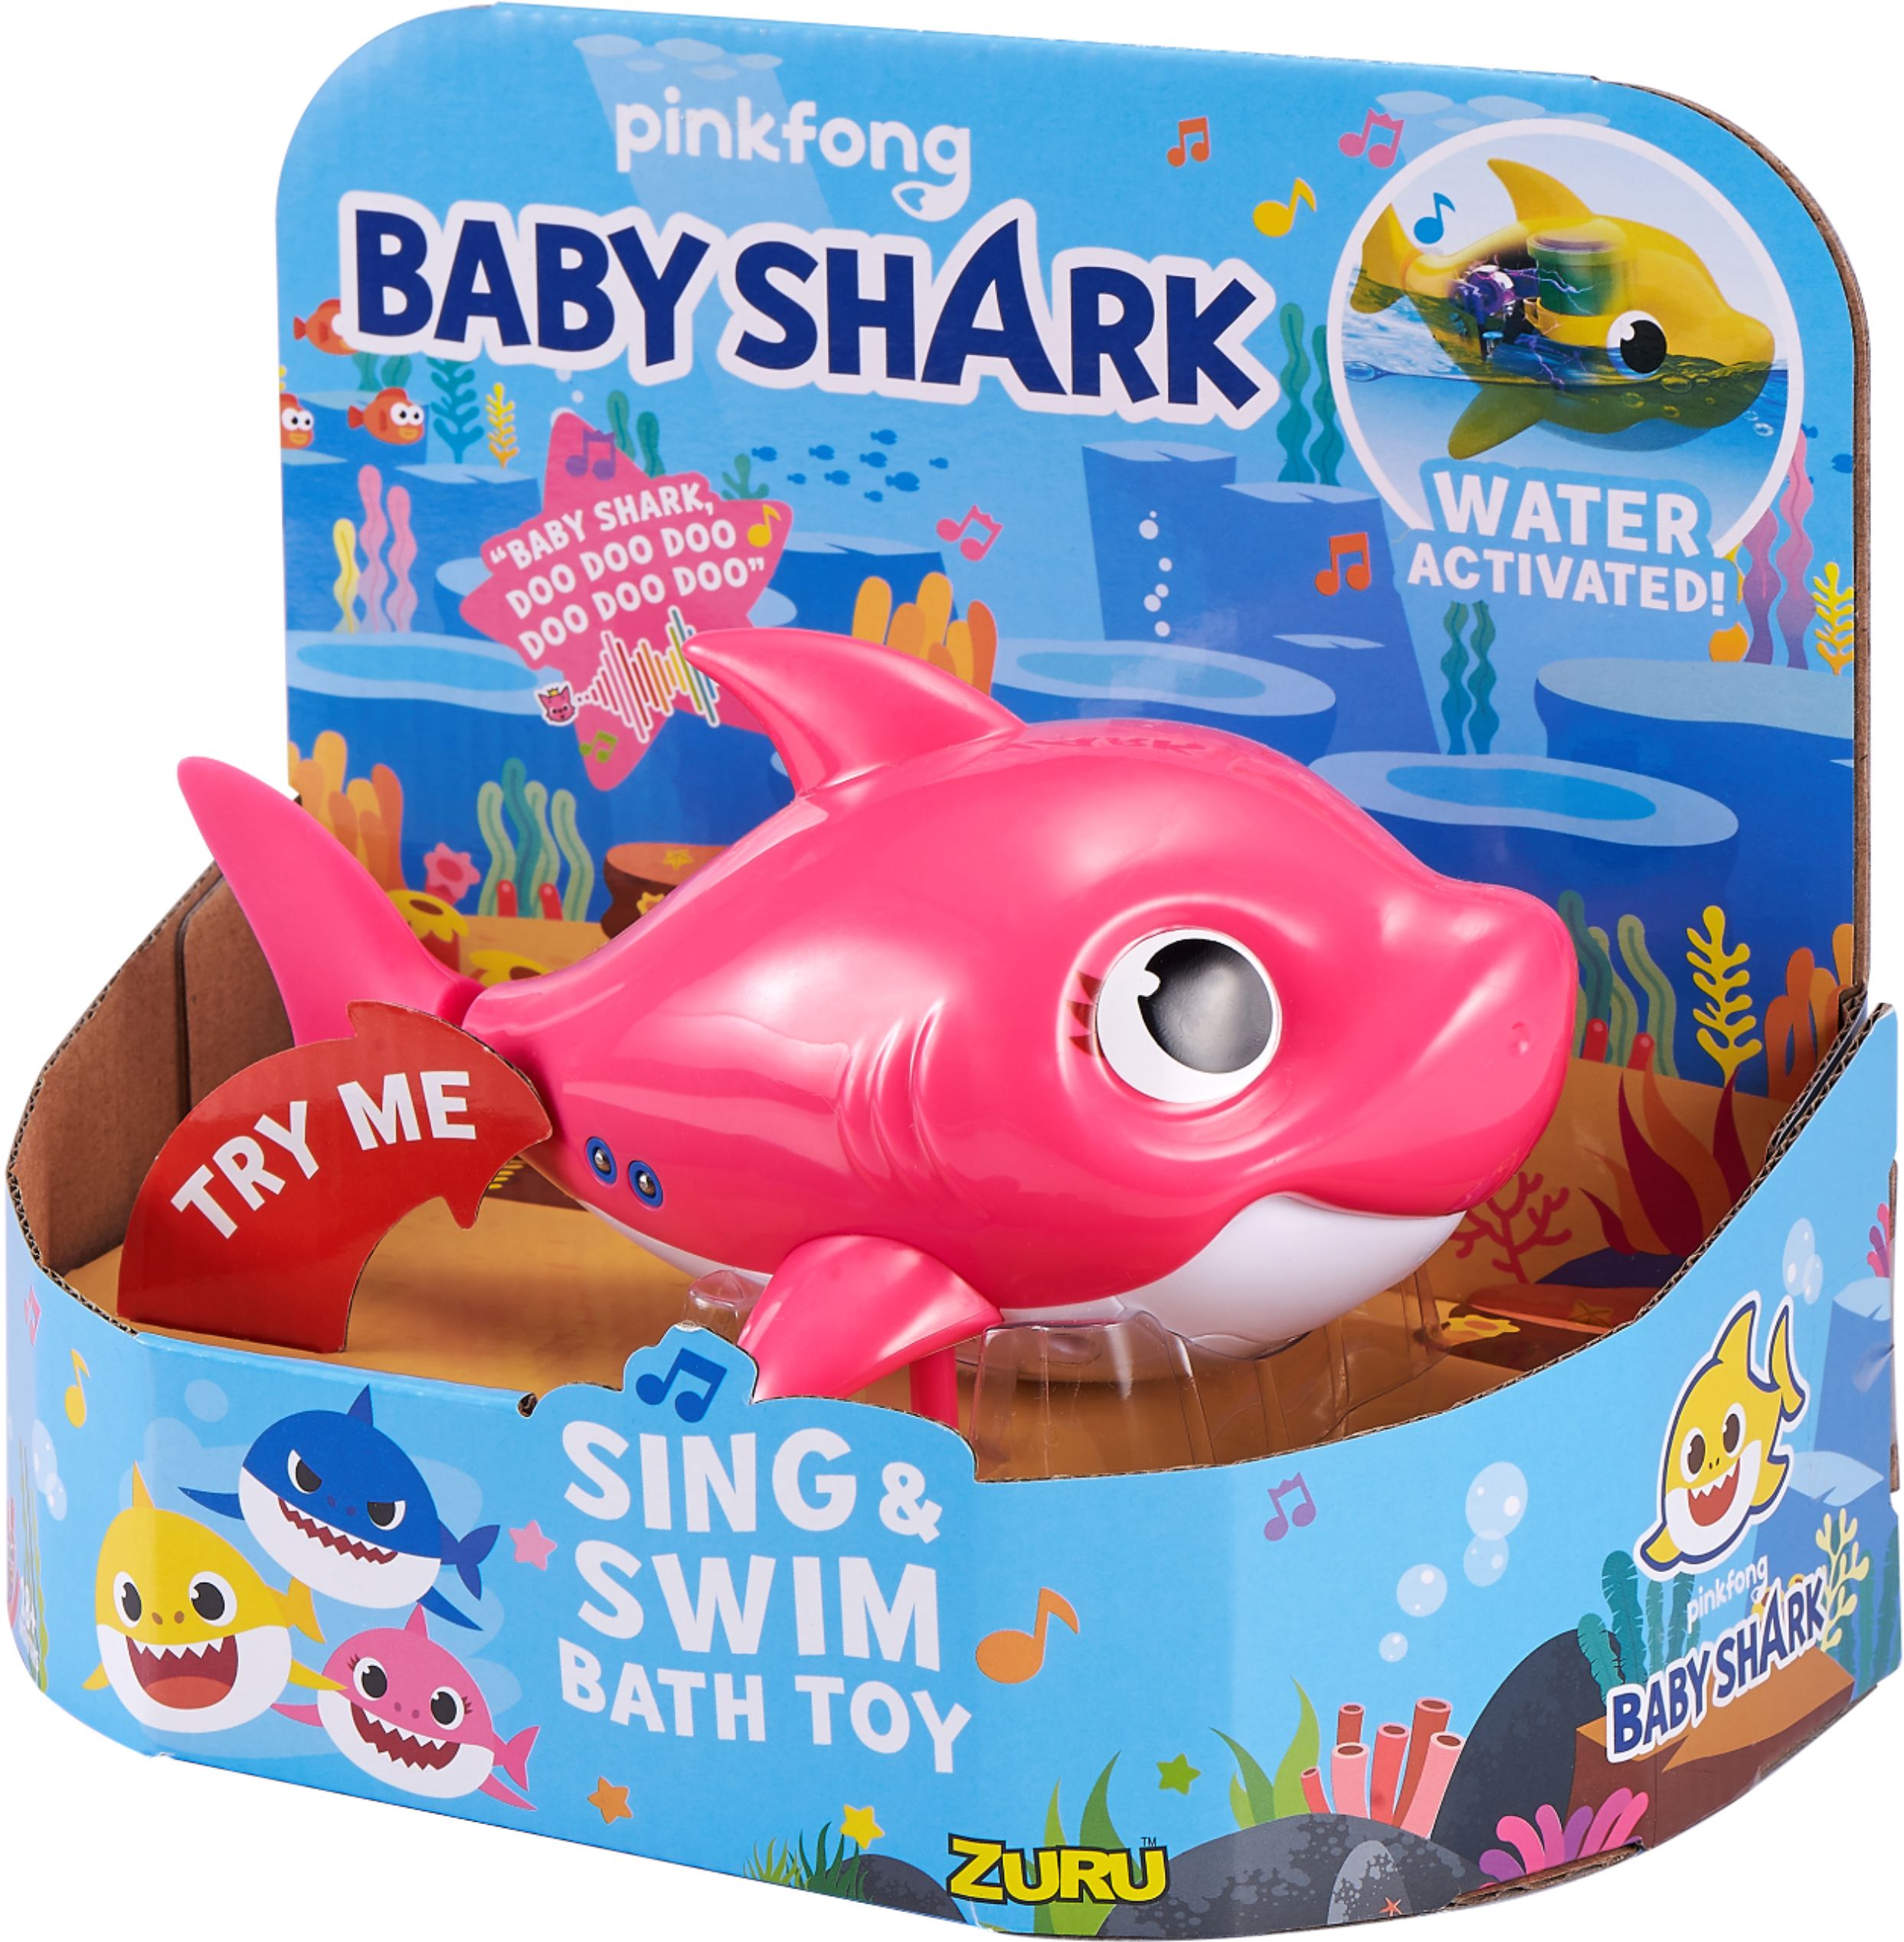 ZURU ROBO ALIVE JUNIOR Baby Shark Battery-Powered Sing and Swim Bath Toy Random